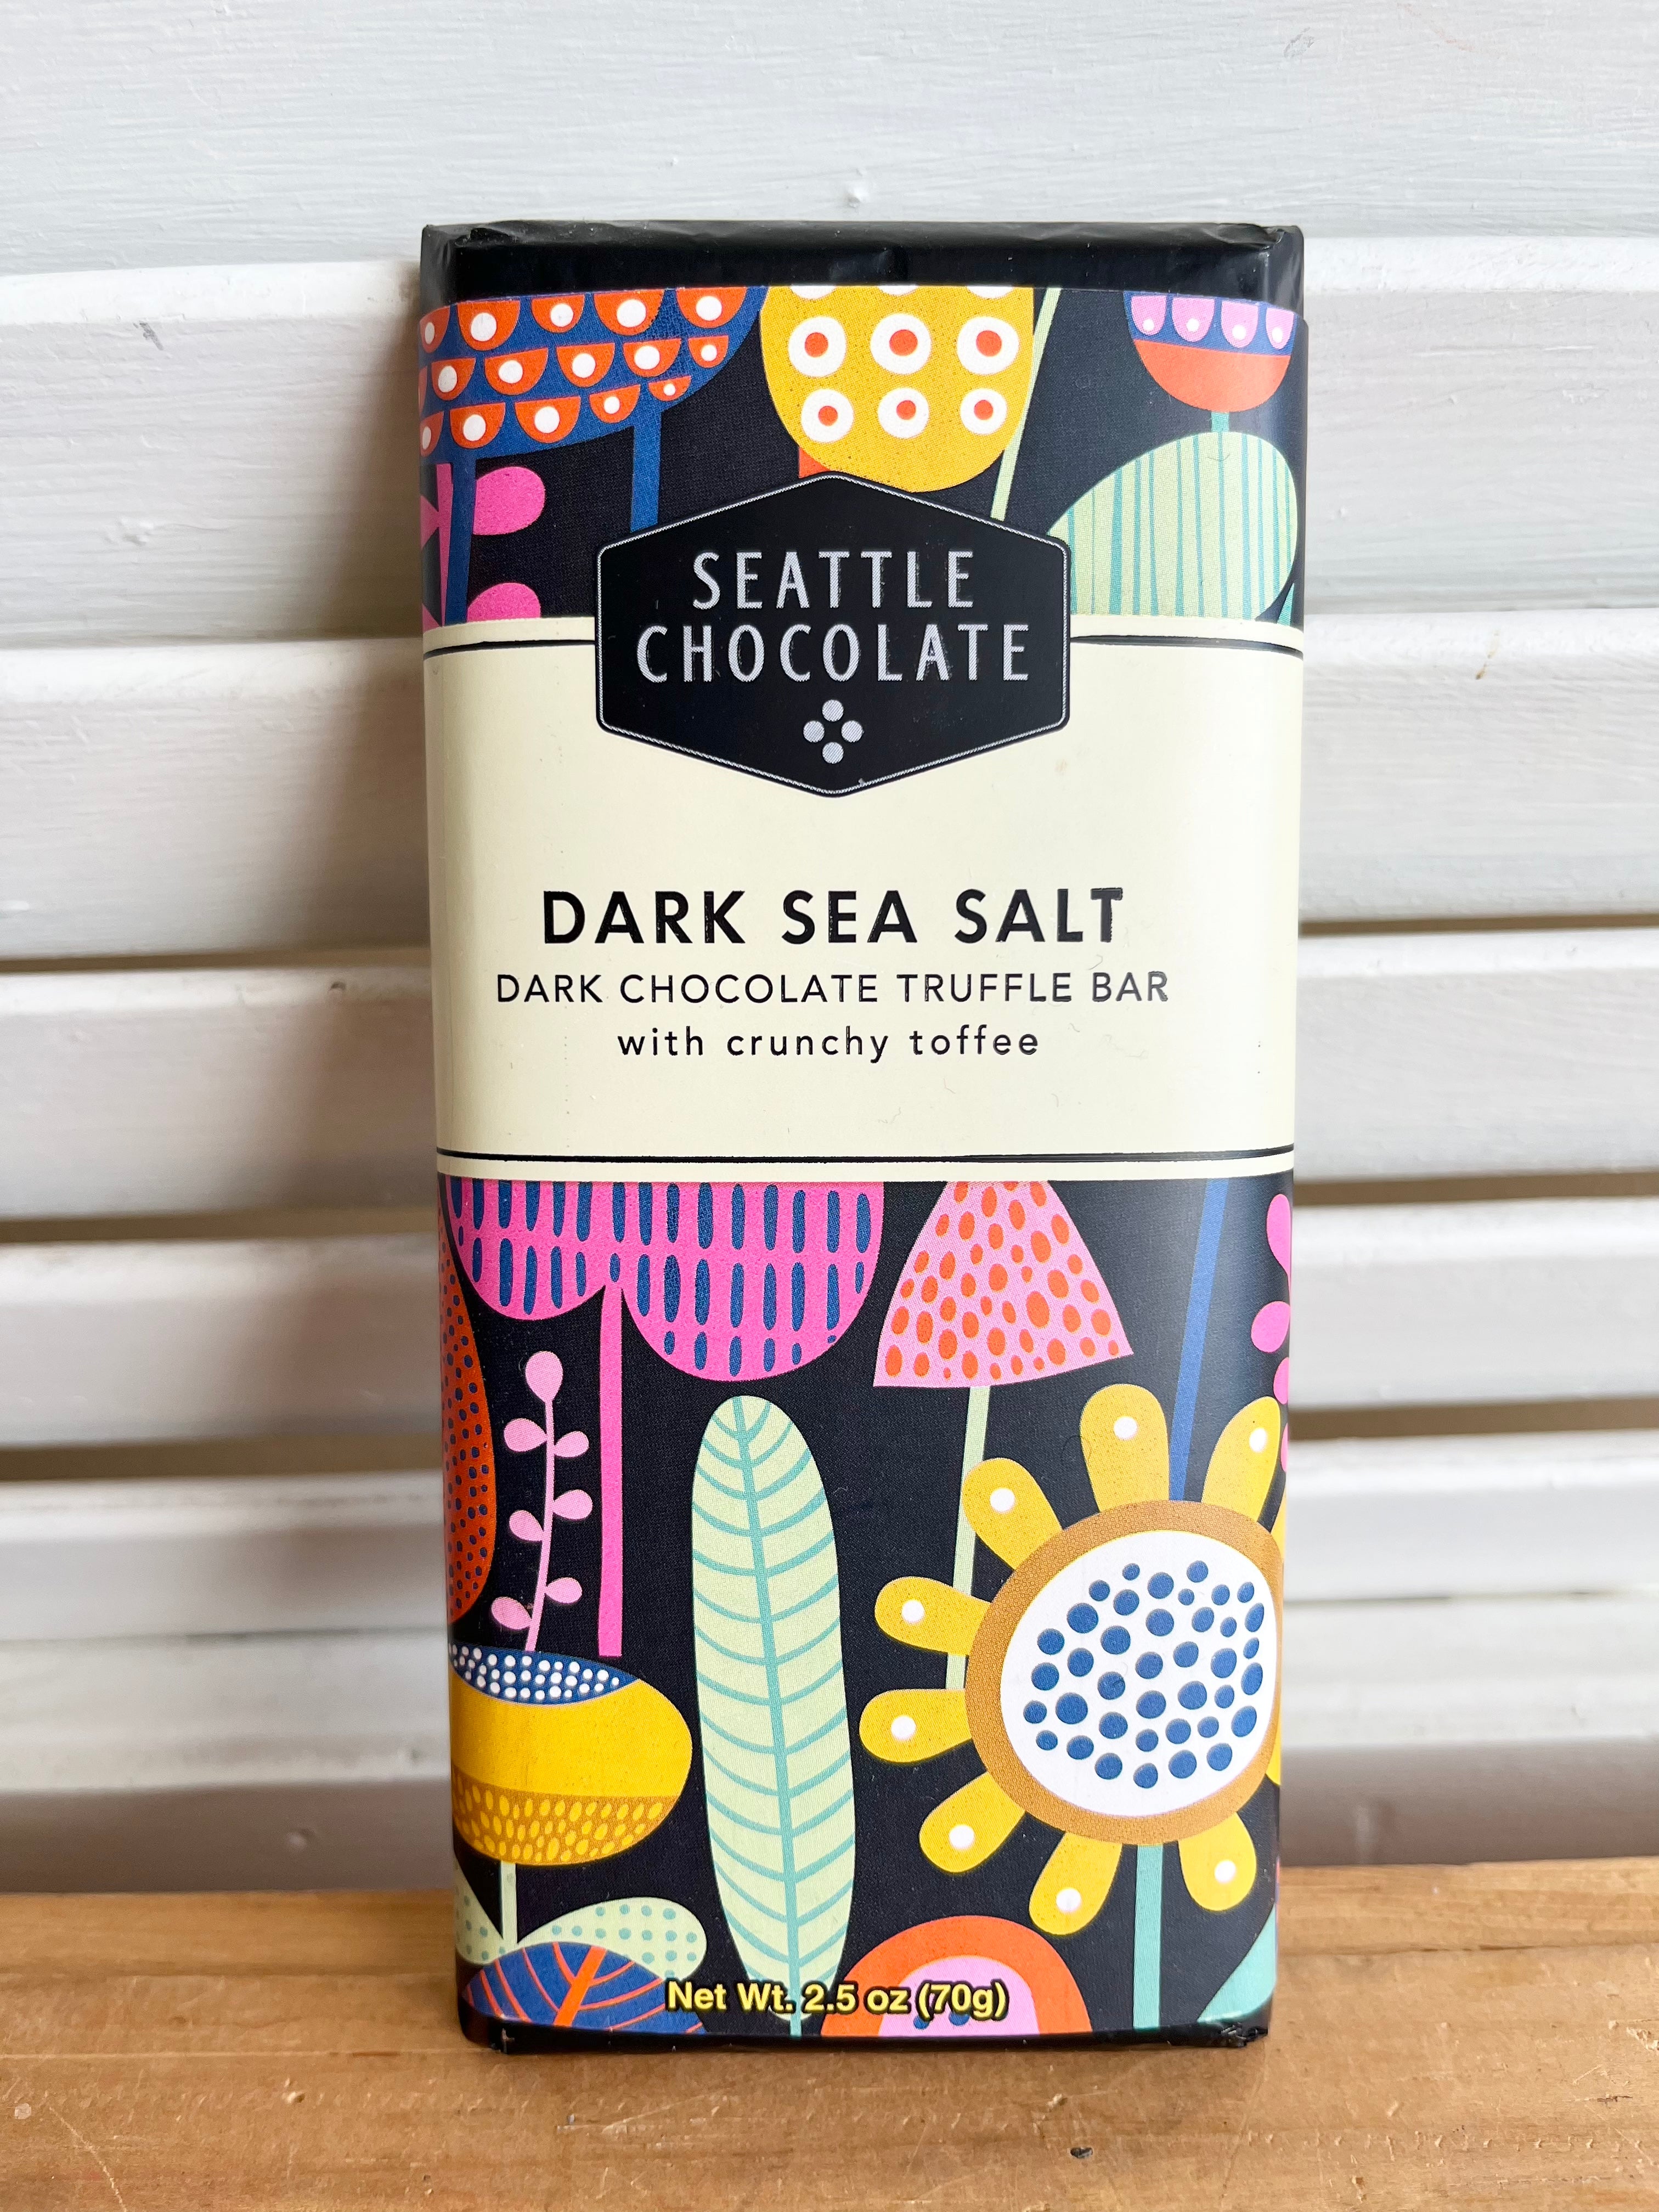 Dark Sea Salt - Seattle Chocolate Truffle bar